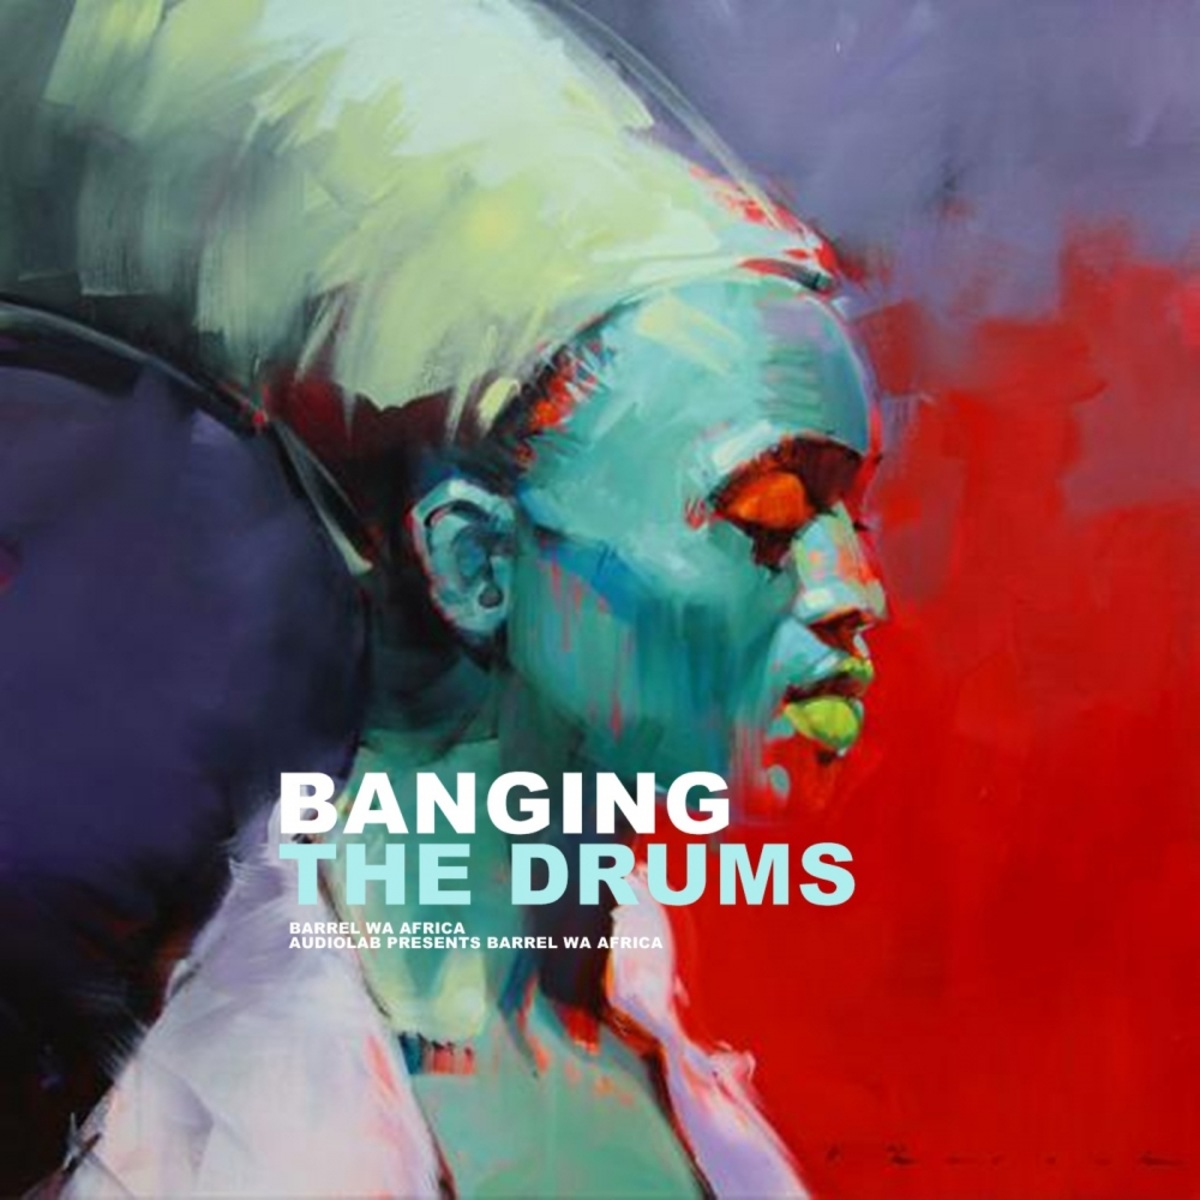 Barrel Wa Afrika - Banging The Drums (Dub Mix) / Audio Lab